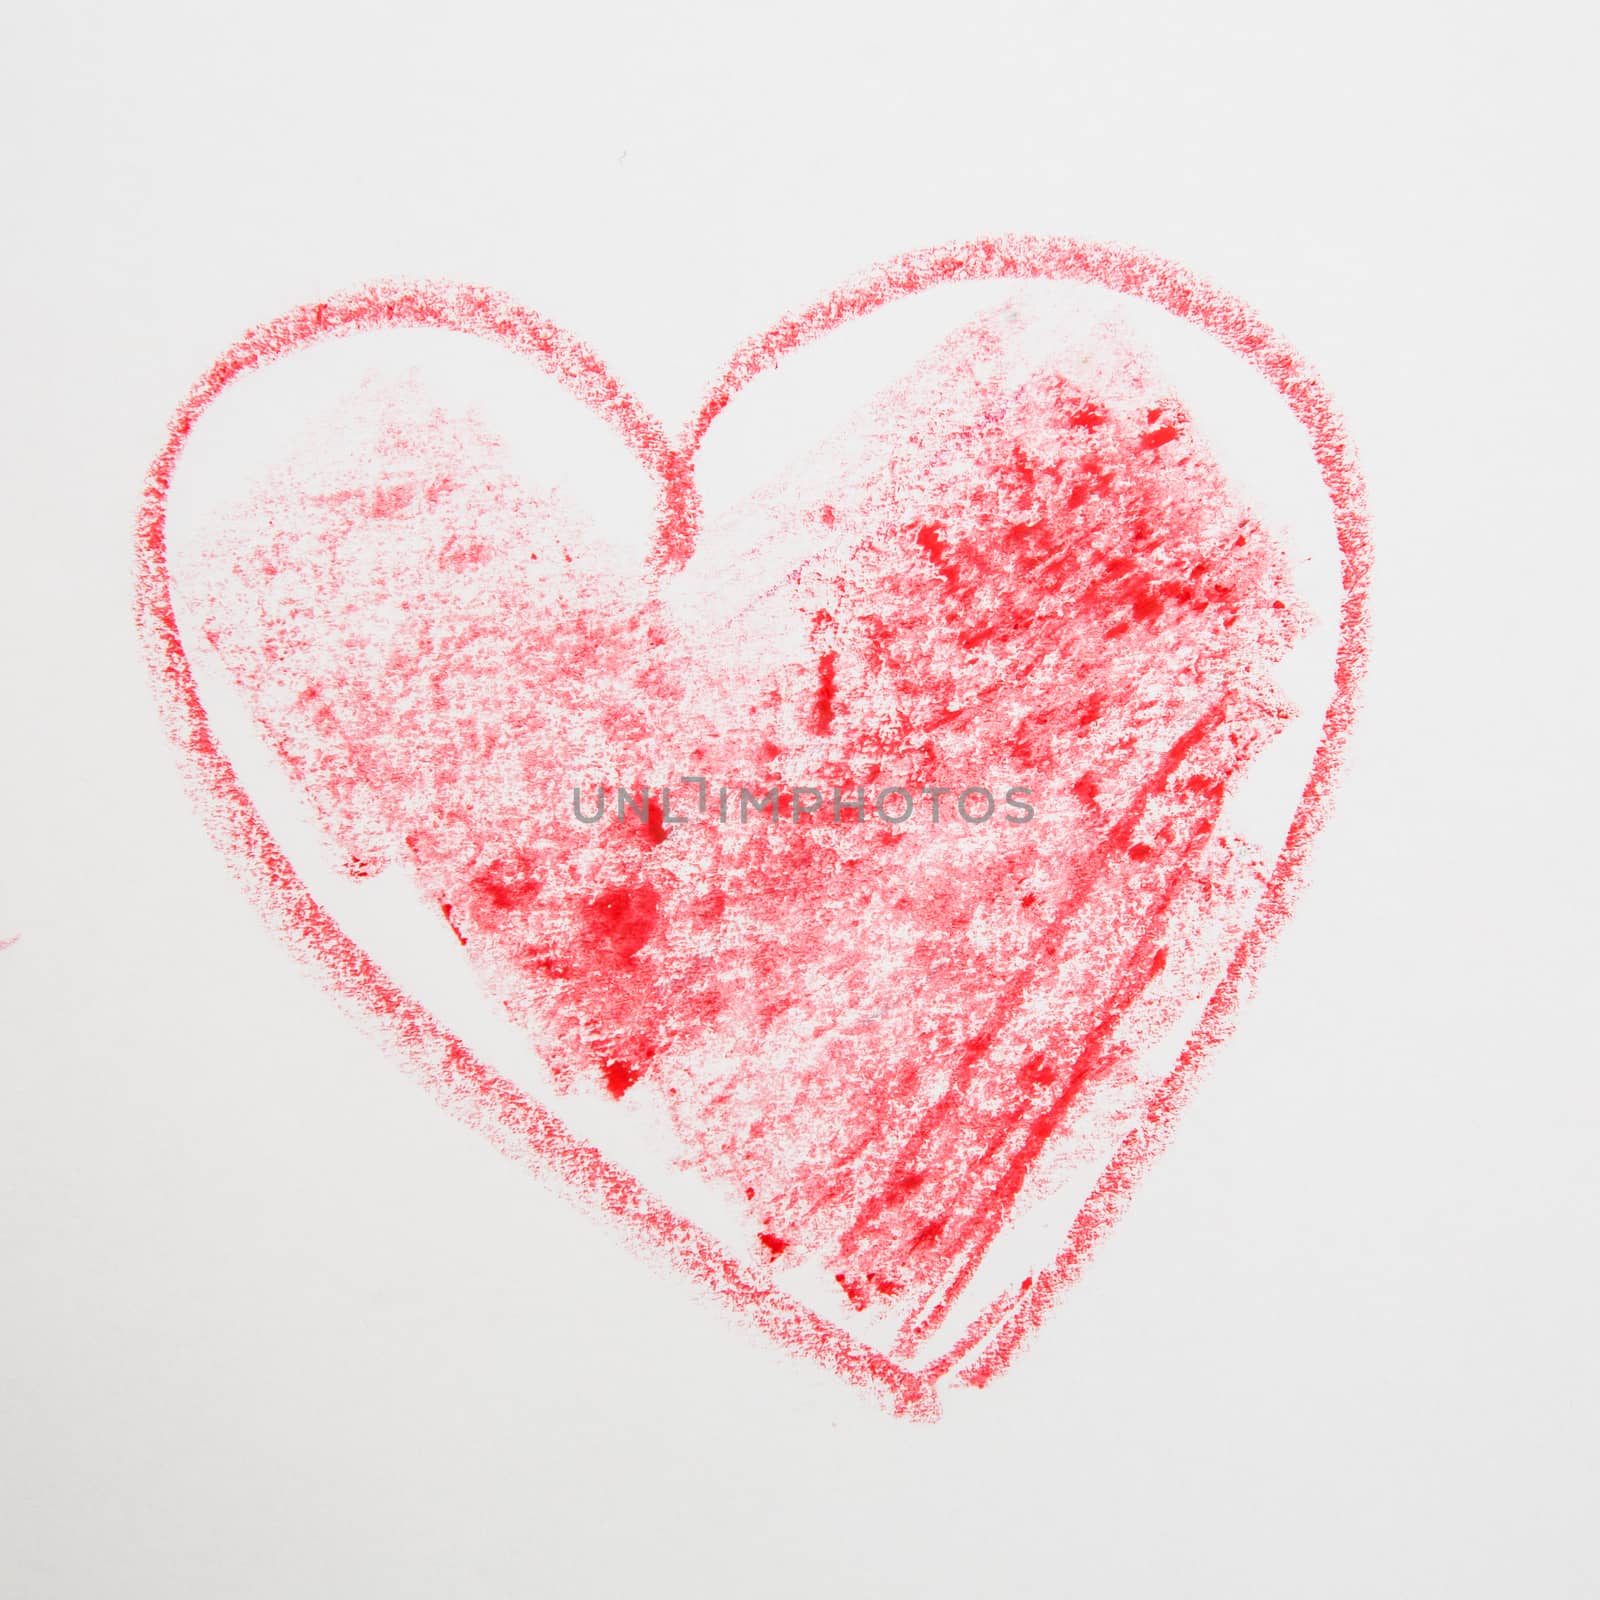 red big heart shape. pencil drawing. Creative card